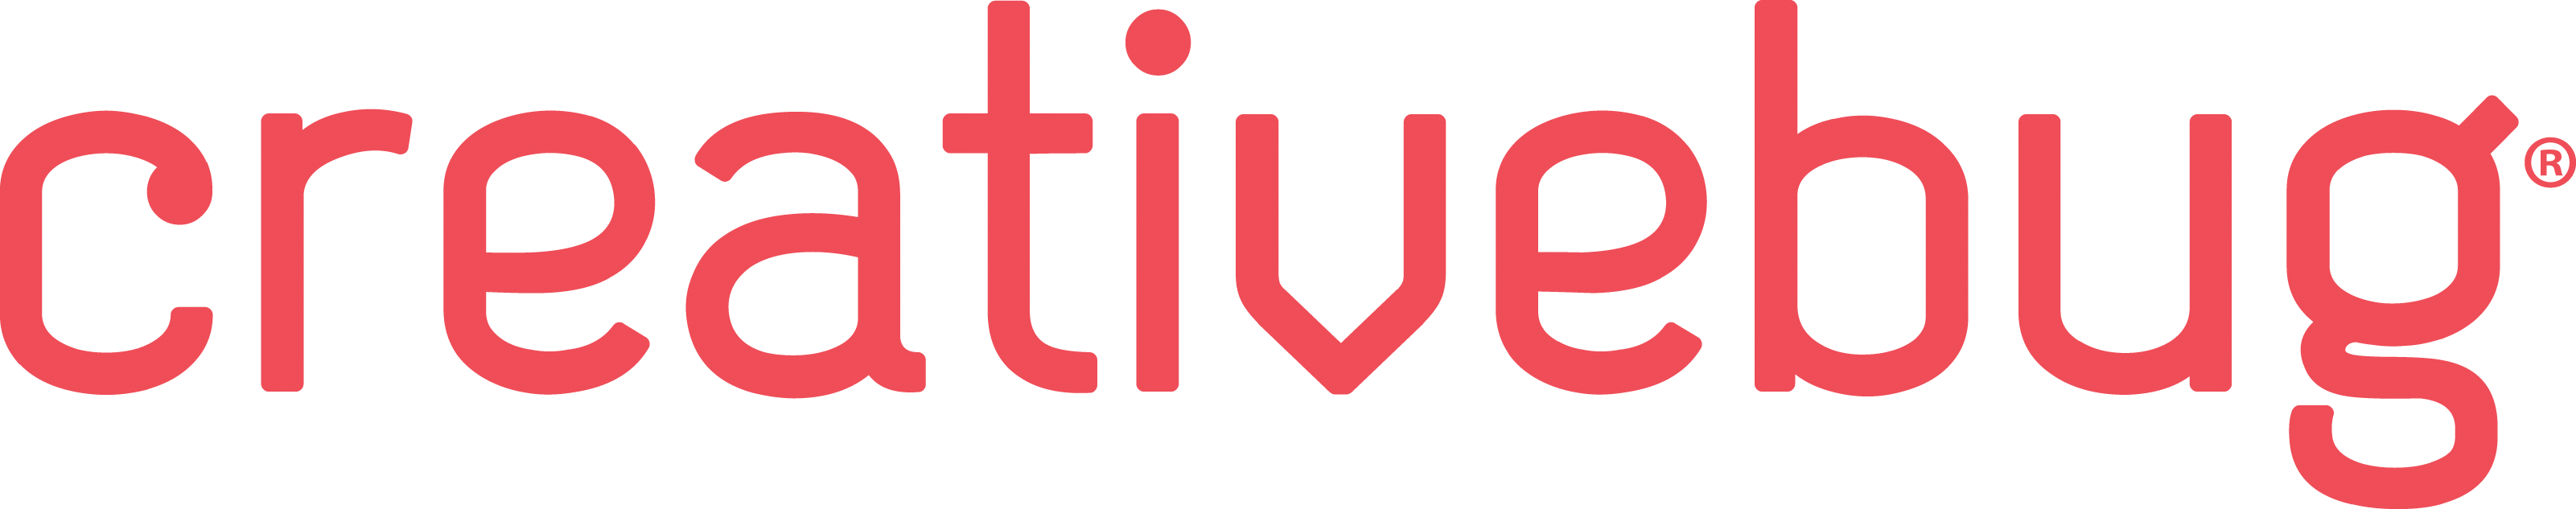 Creative bug logo